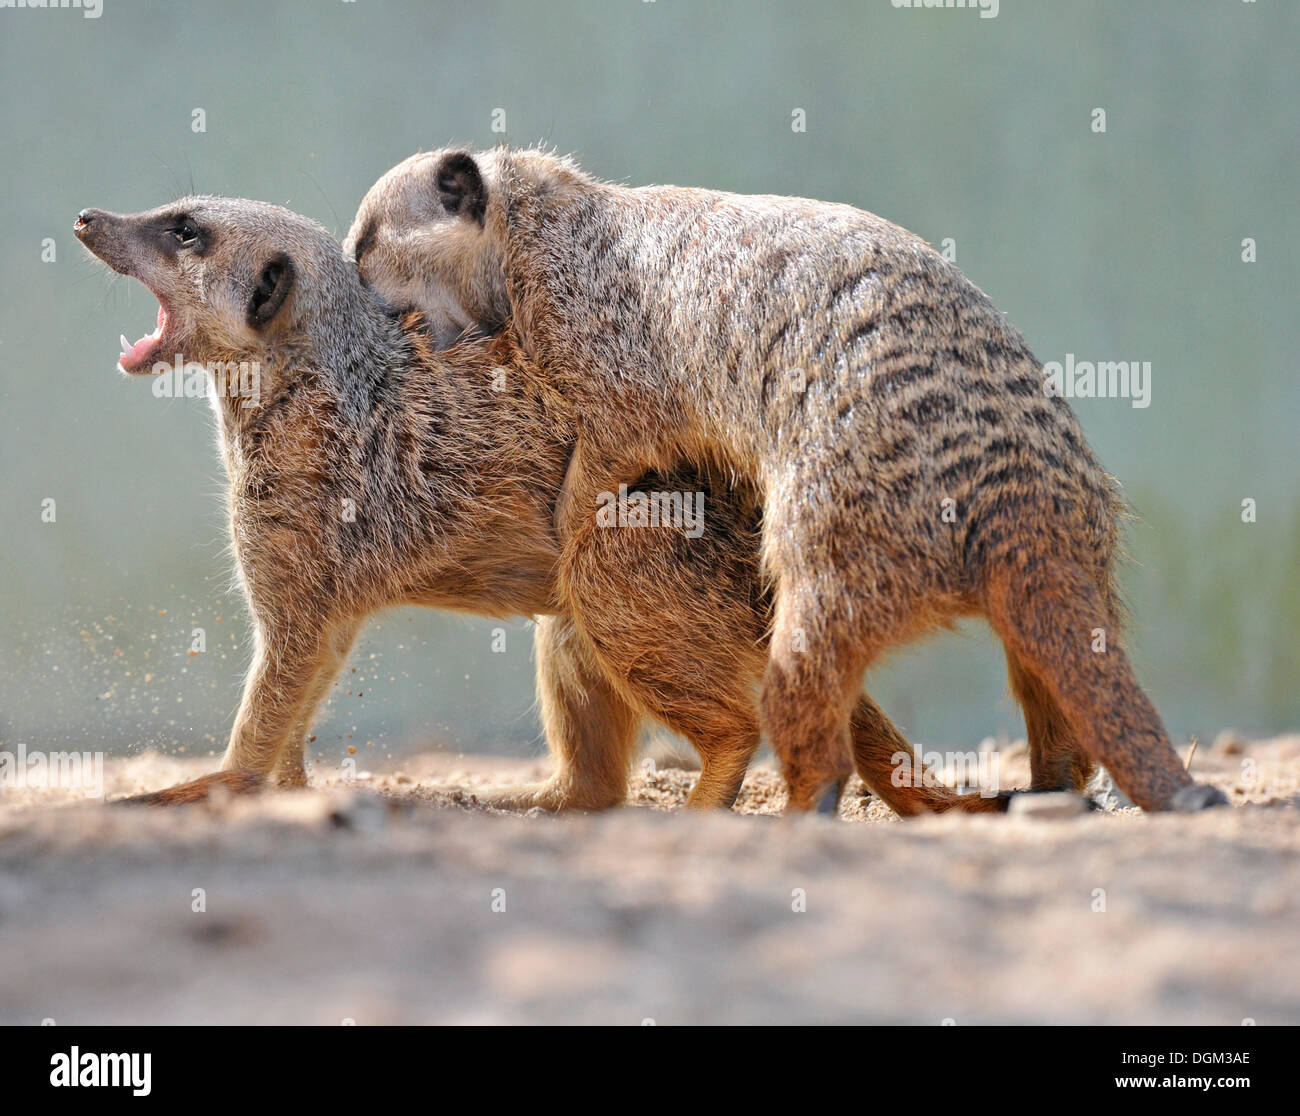 Young Meerkats (Suricata suricatta) wrestling Stock Photo